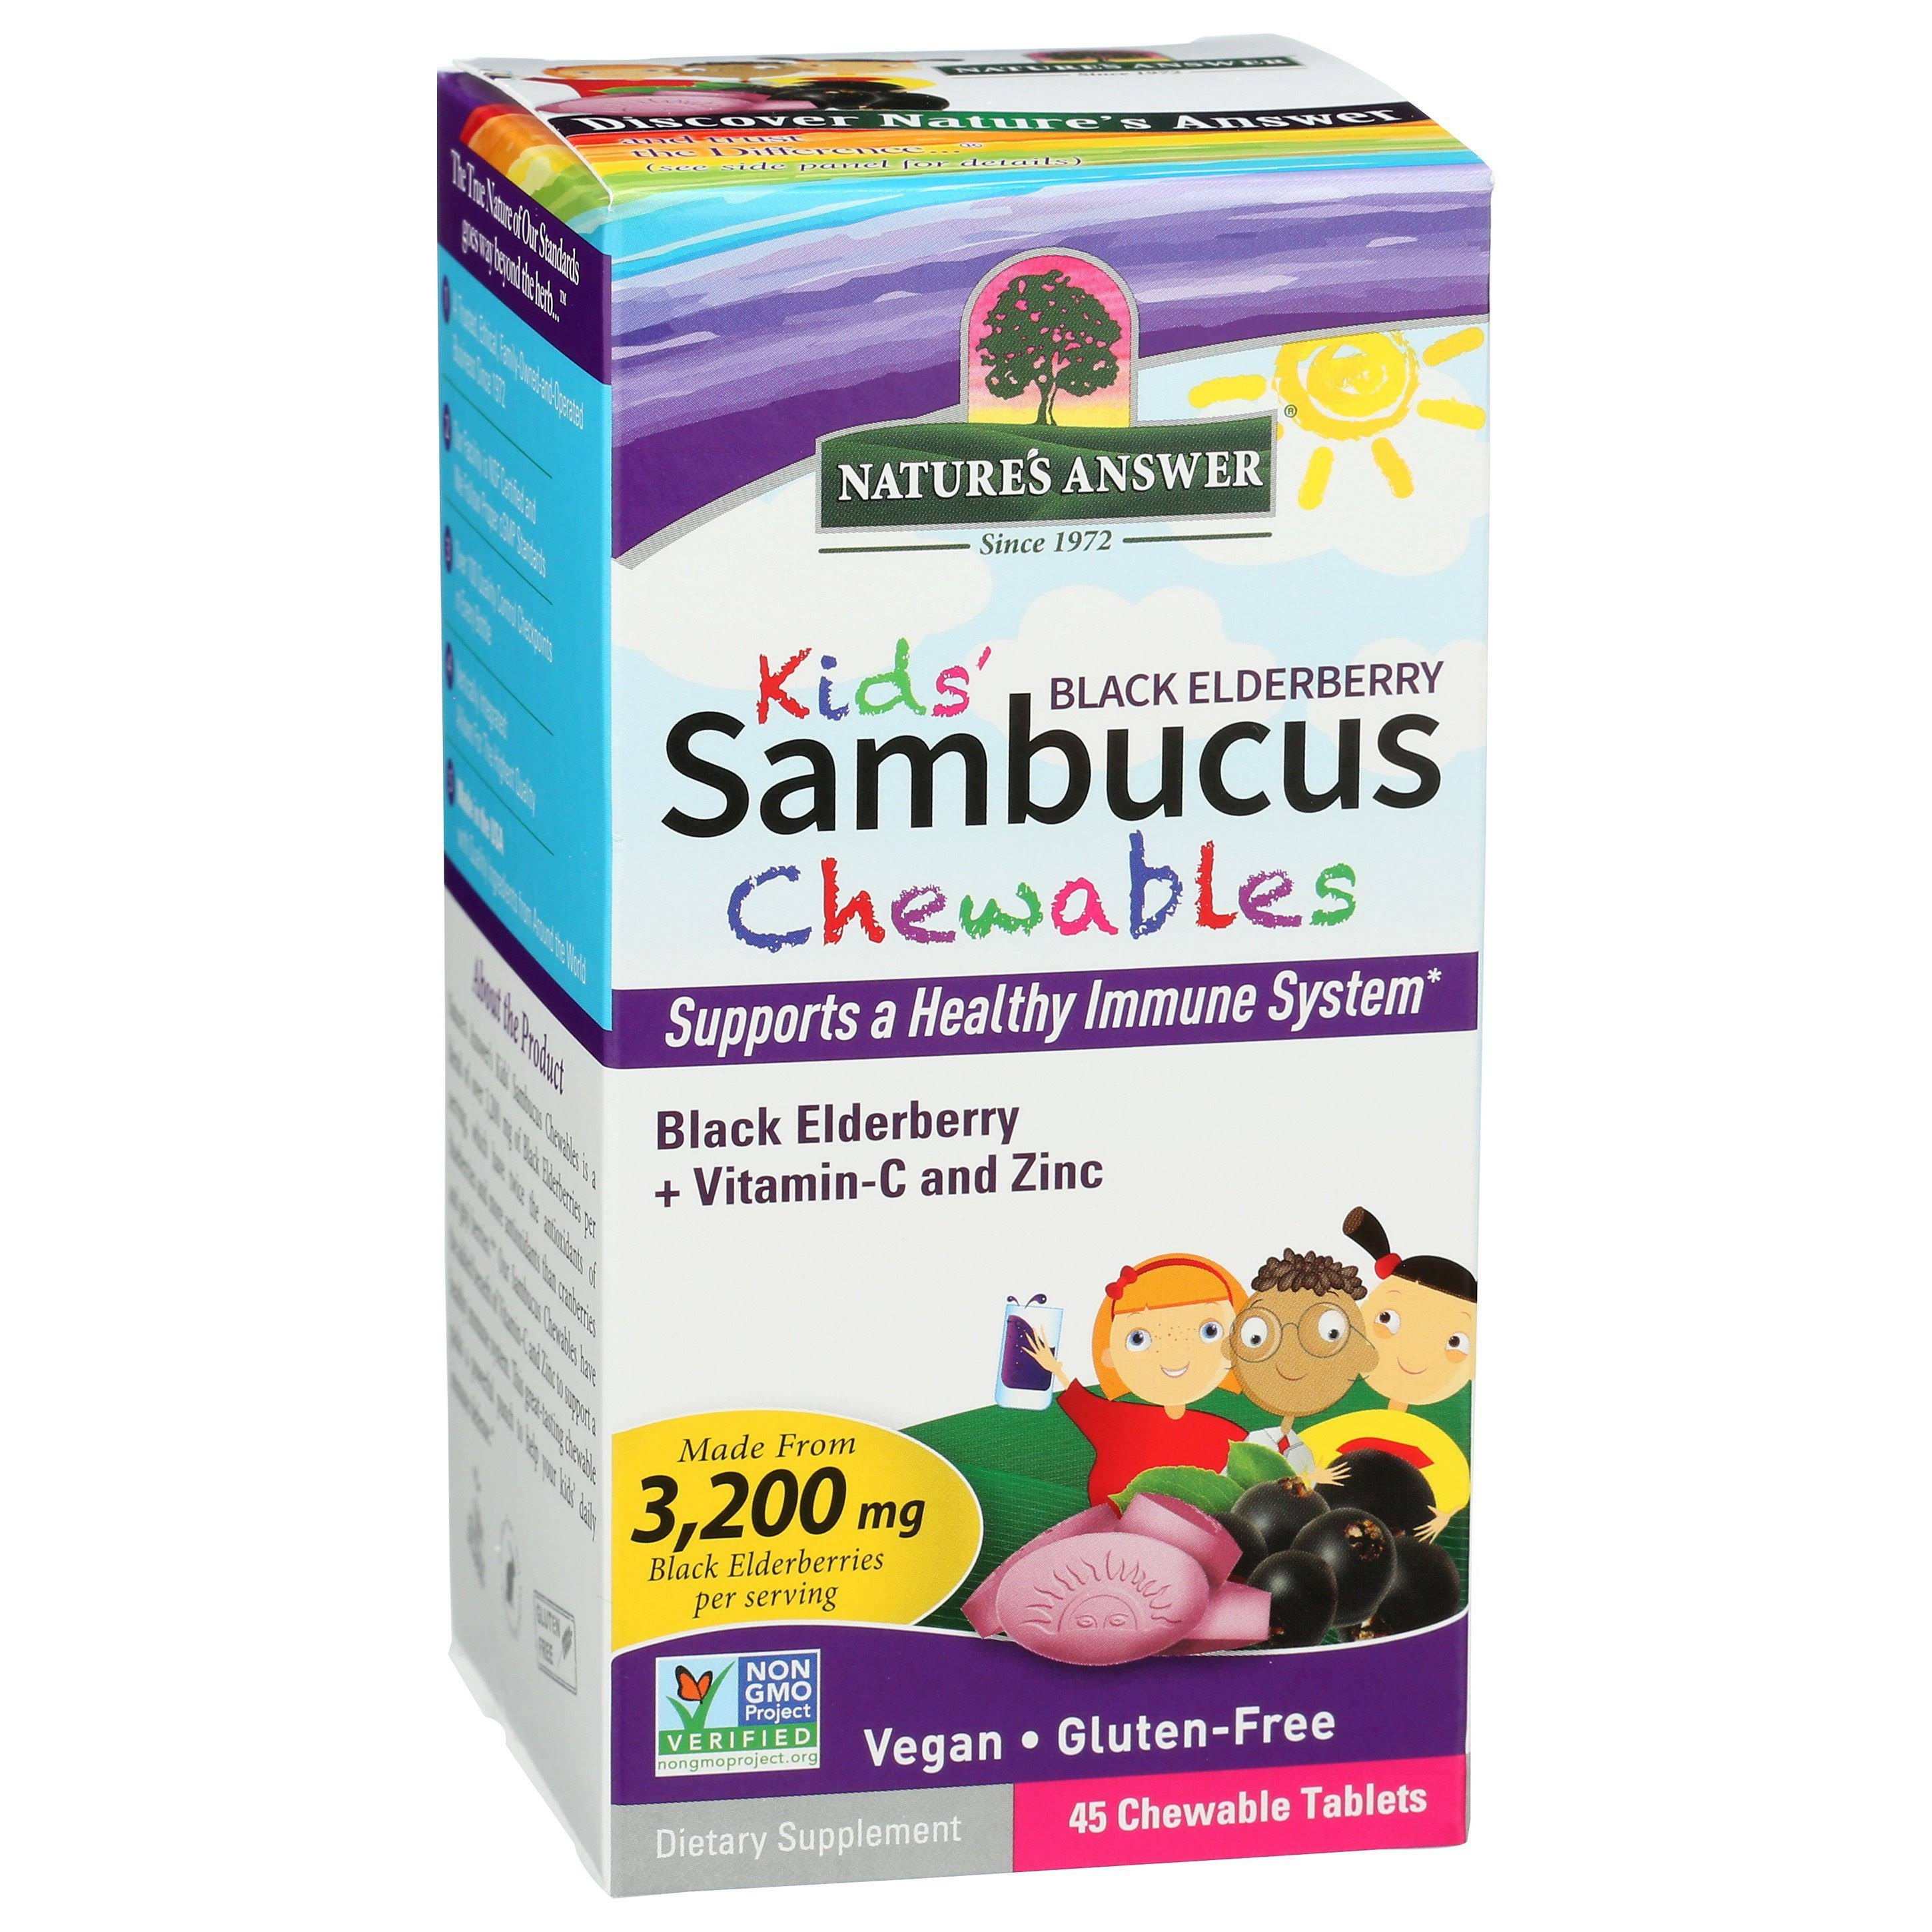 Nature's Answer Kid's Sambucus Chewables Black Elderberry + Vitamin-C and Zinc 45 Chewable Tablets